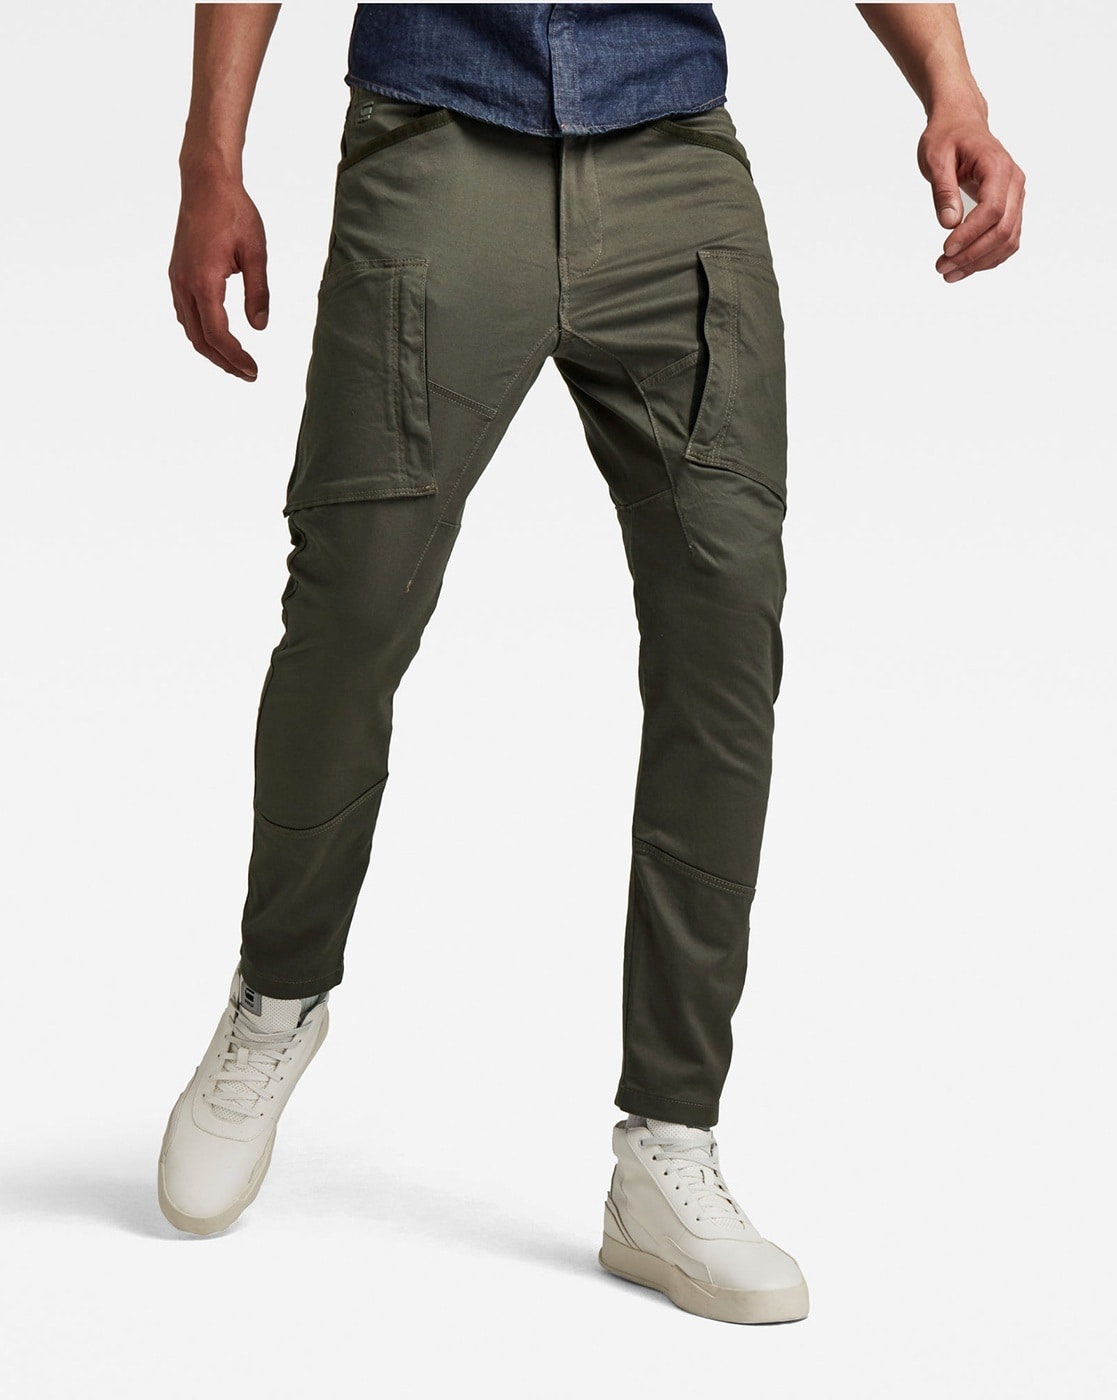 Buy Grey Trousers  Pants for Men by G STAR RAW Online  Ajiocom